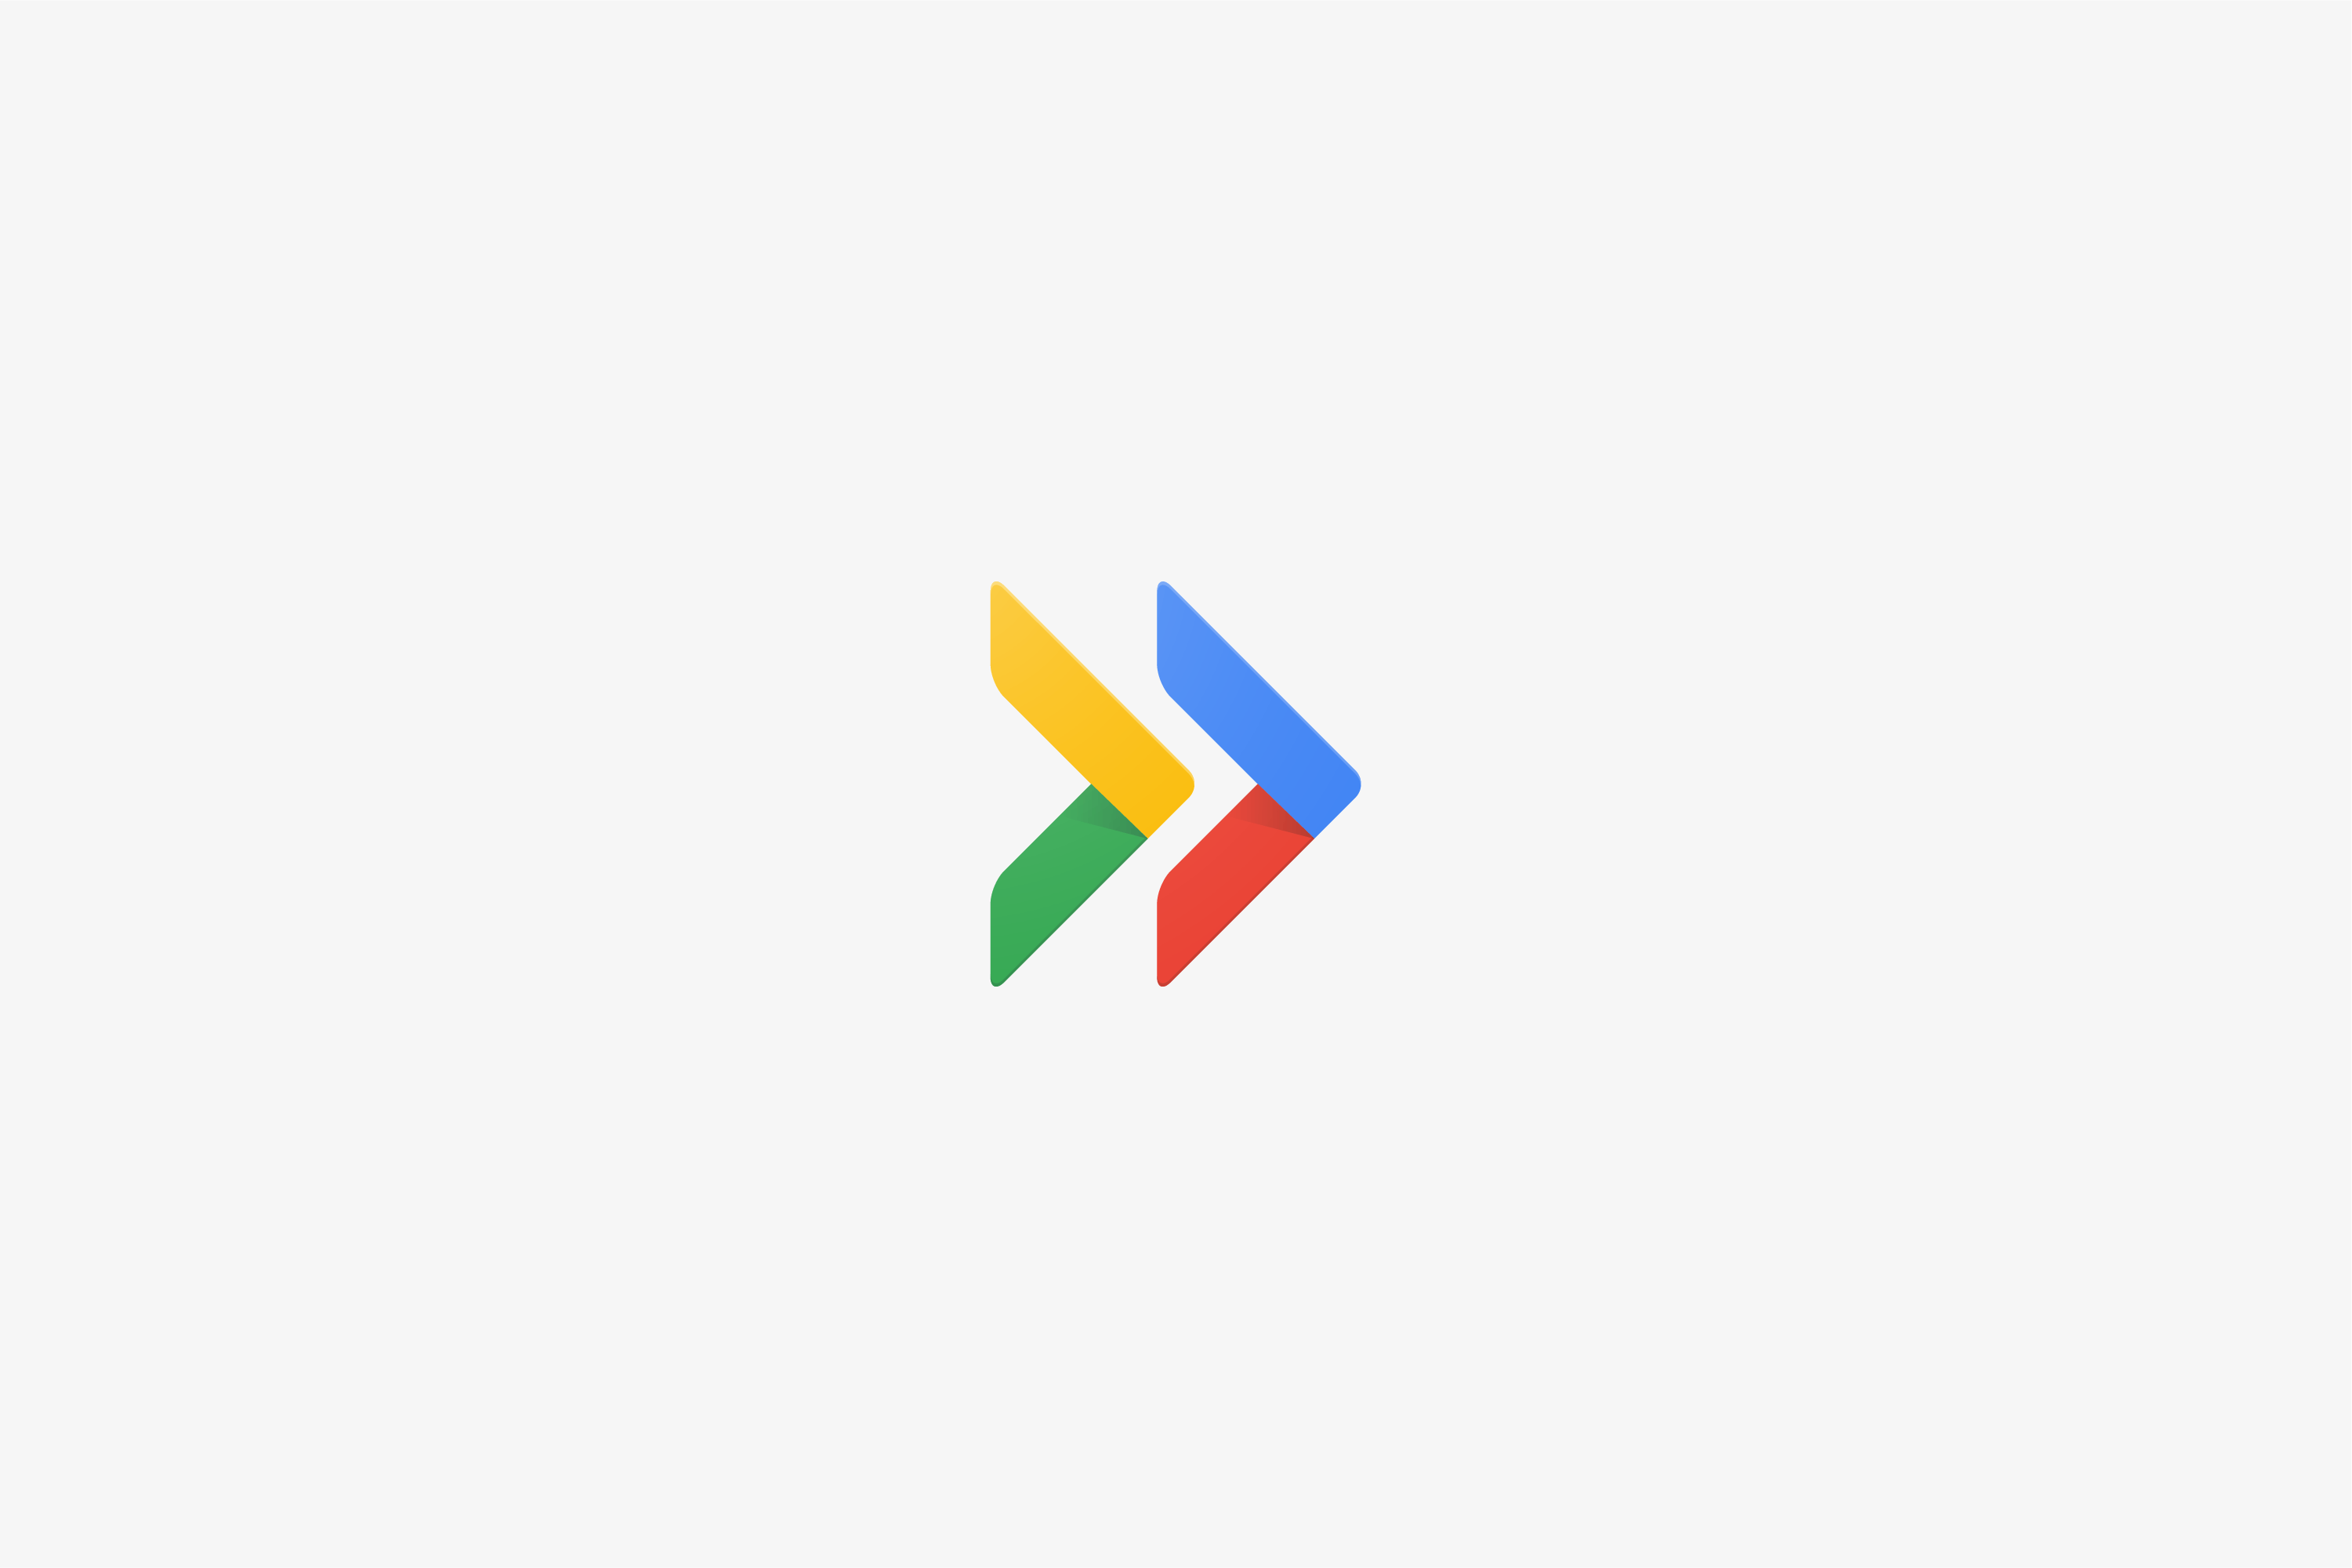 Google Material Logo - Google Digital Academy - Brand Identity Design | Jack Morgan